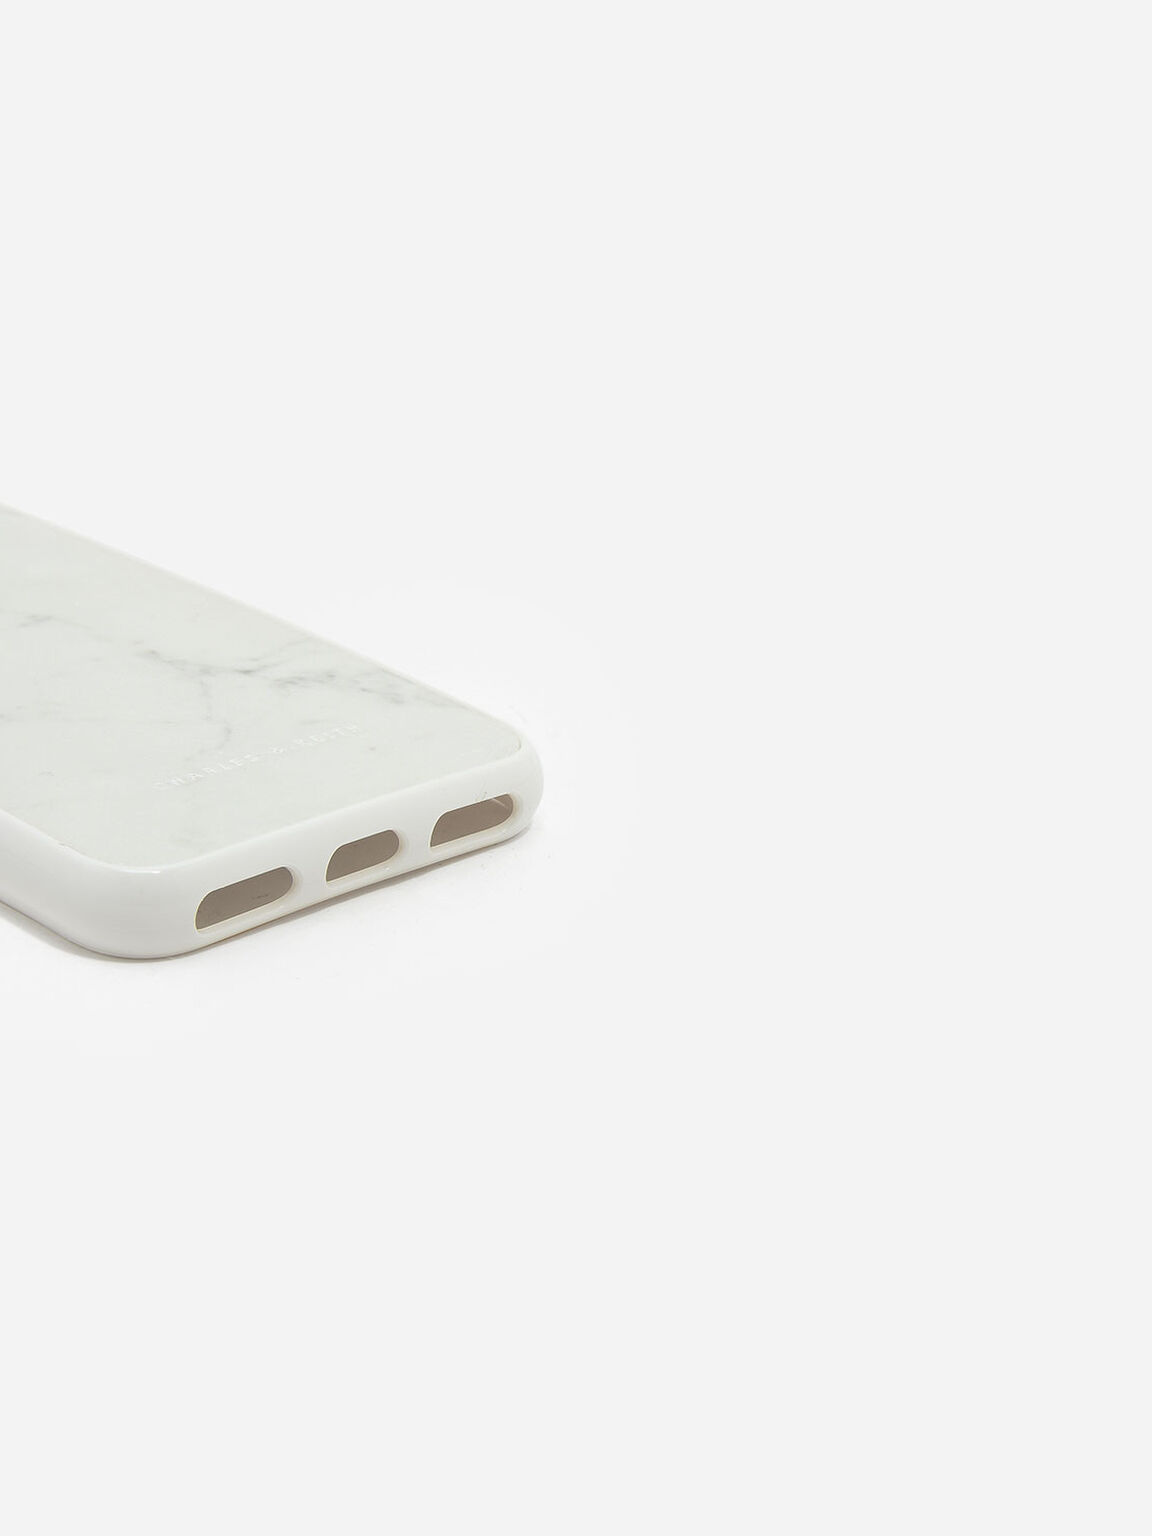 Marble iPhone Case, White, hi-res